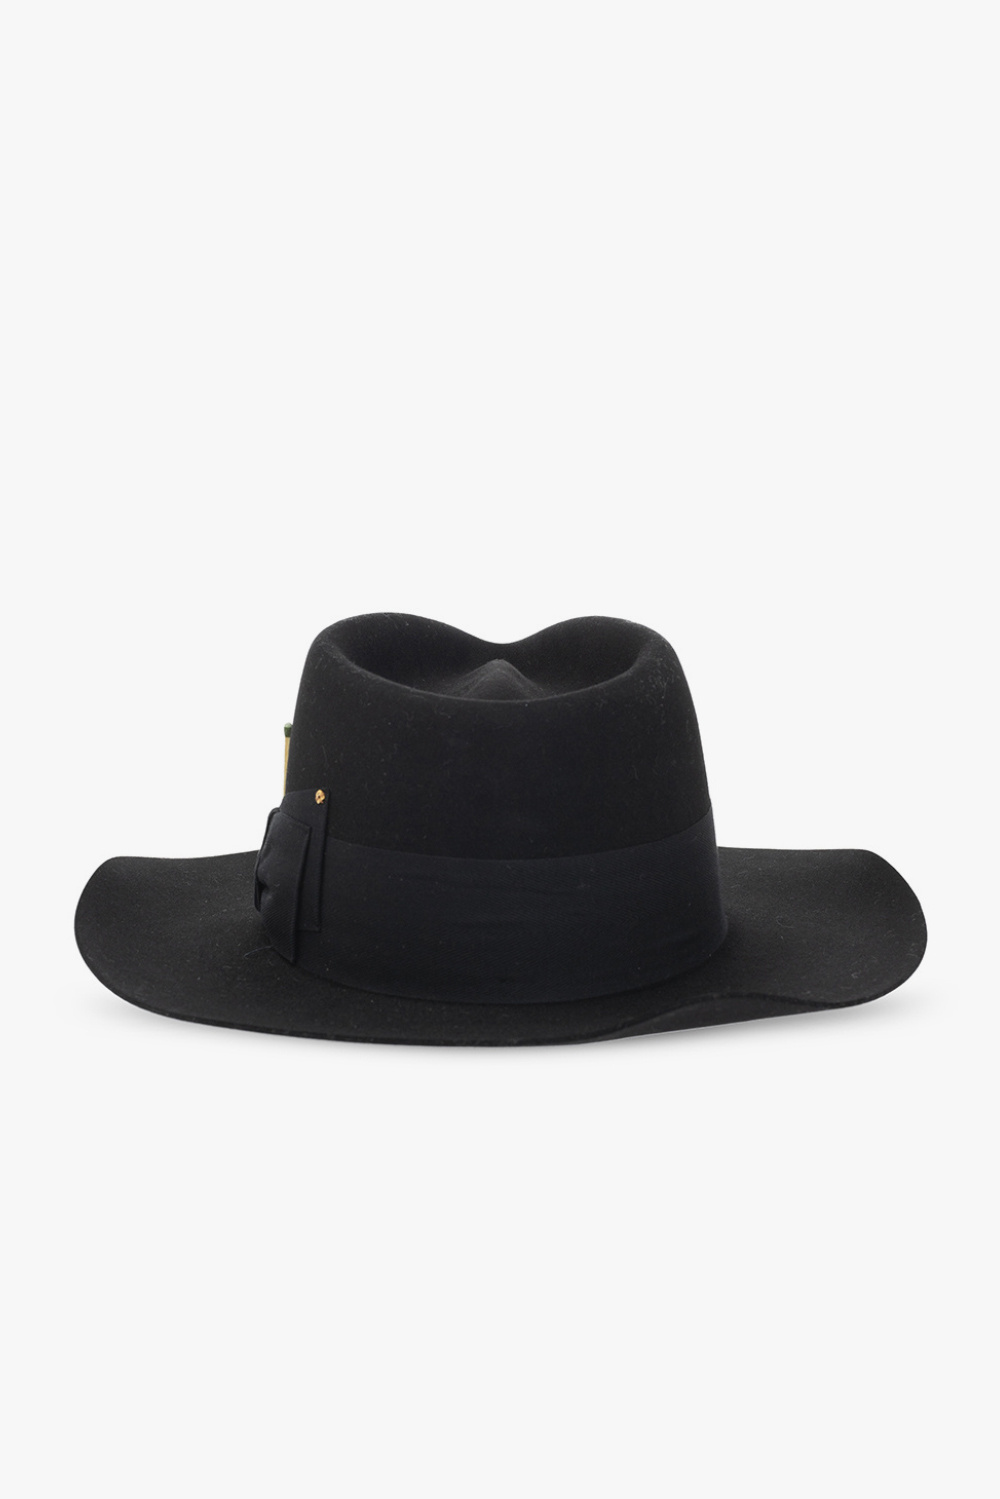 Nick Fouquet ‘Tuck’ felt Fragrance hat